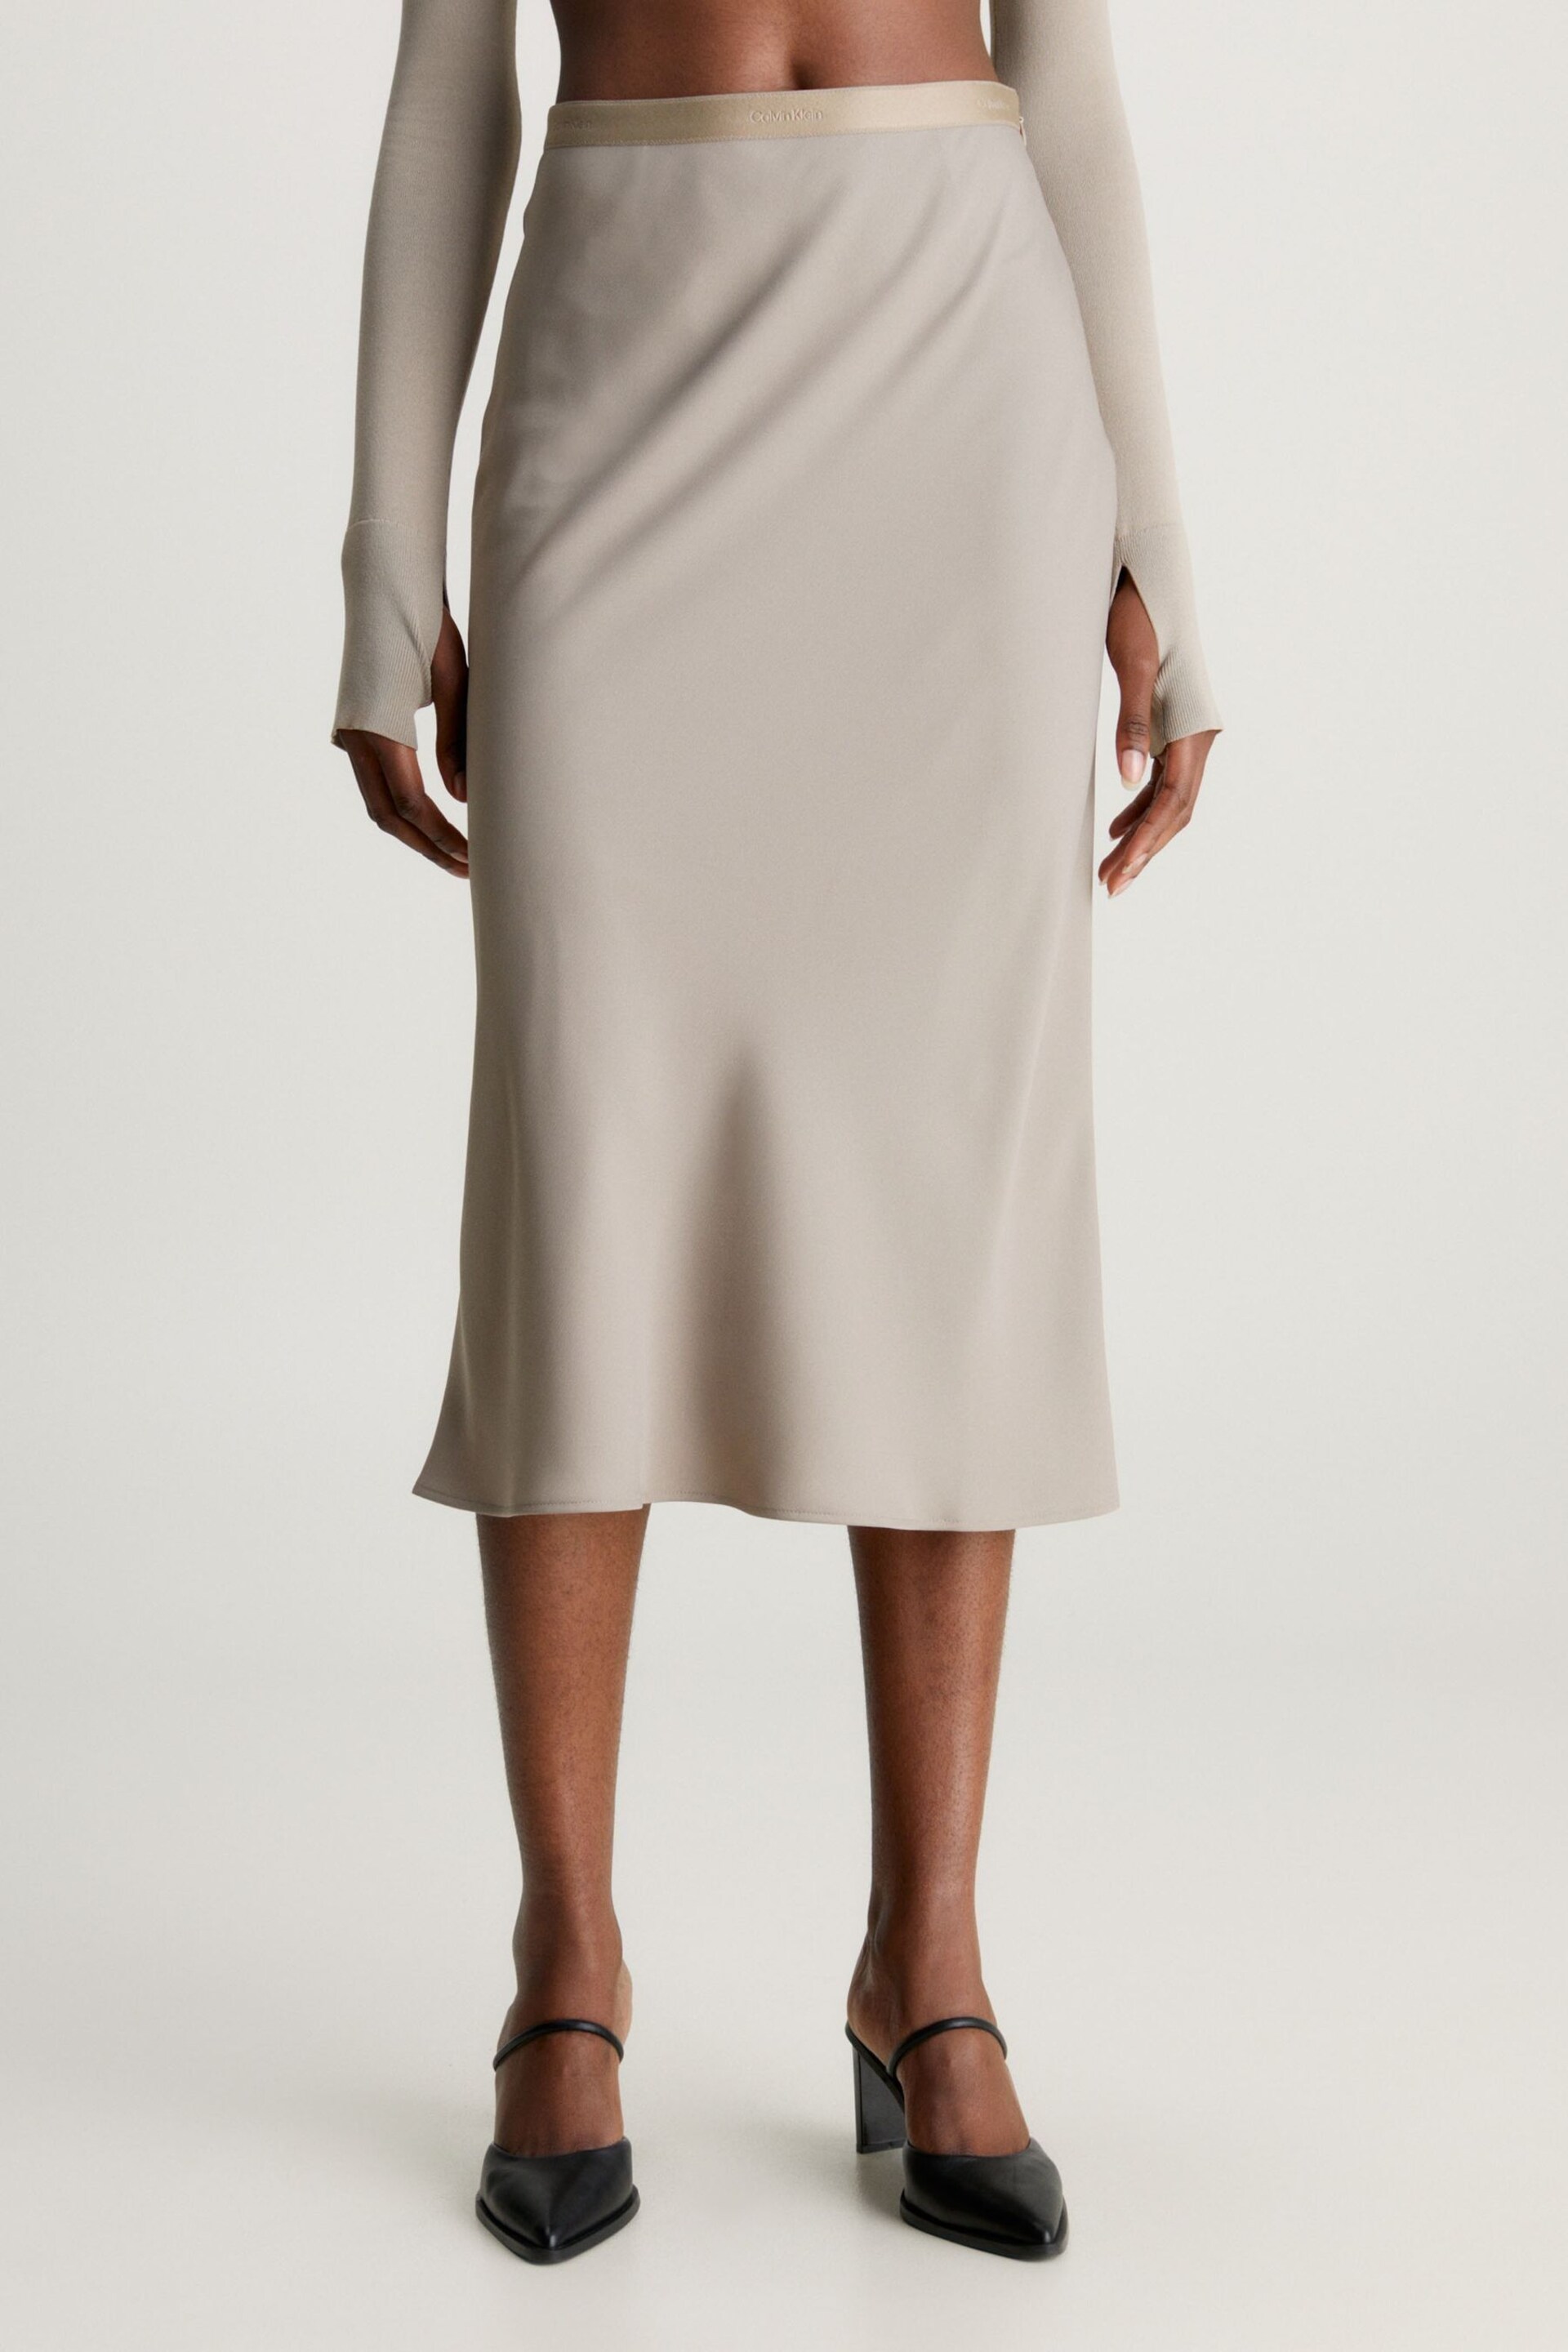 Calvin Klein Grey Recycled Midi Skirt - Image 1 of 5